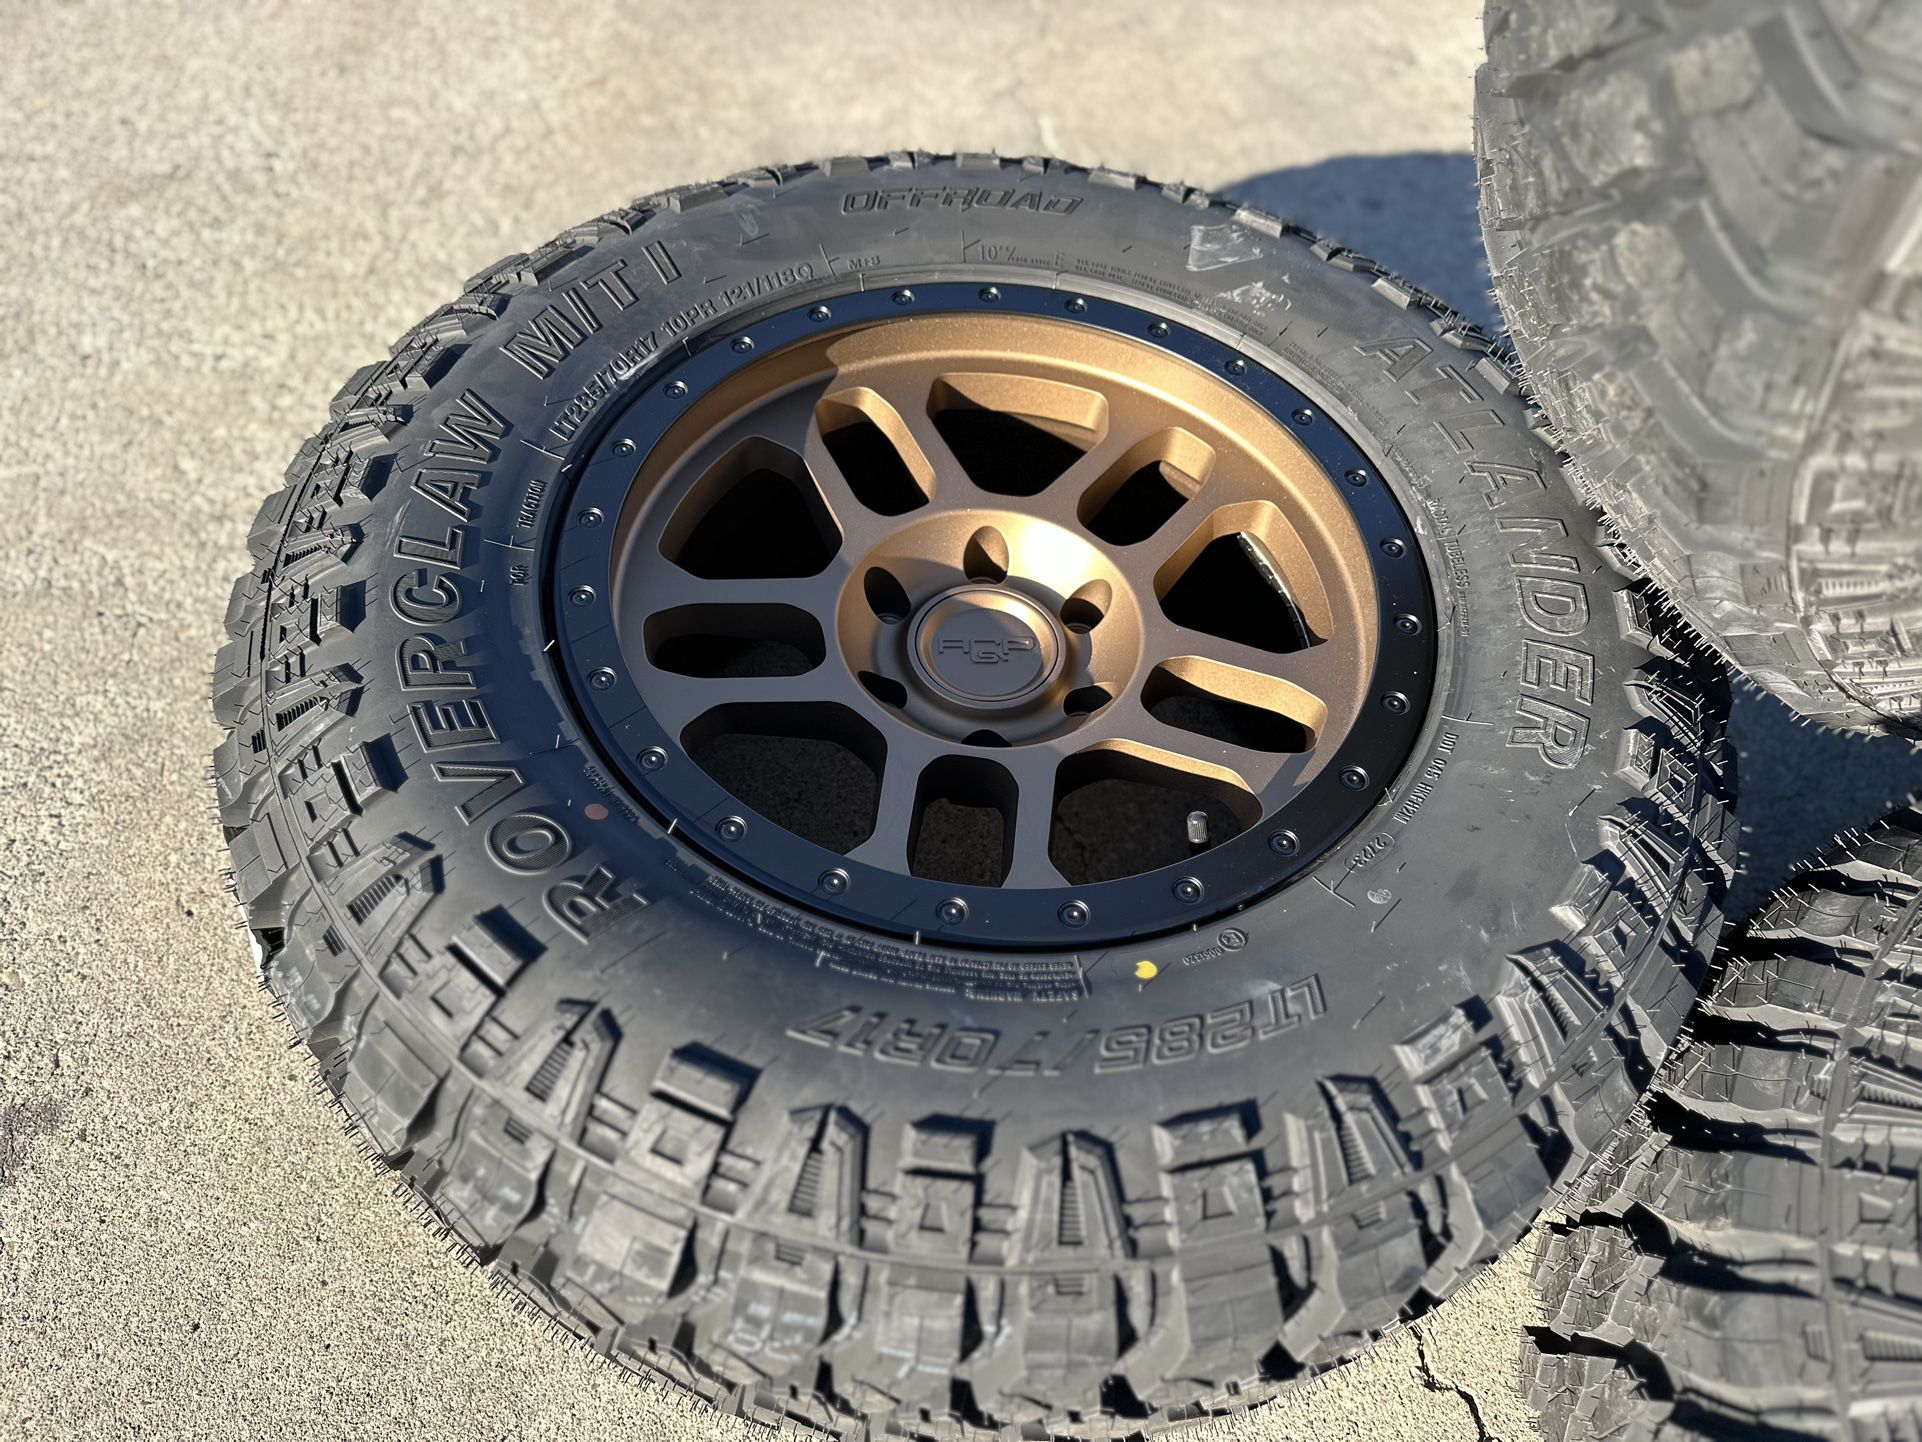 17” Gold Wheels Rims and Tires Chevy Silverado Tahoe Suburban GMC Sierra Yukon Denali LT285/70R17 MT